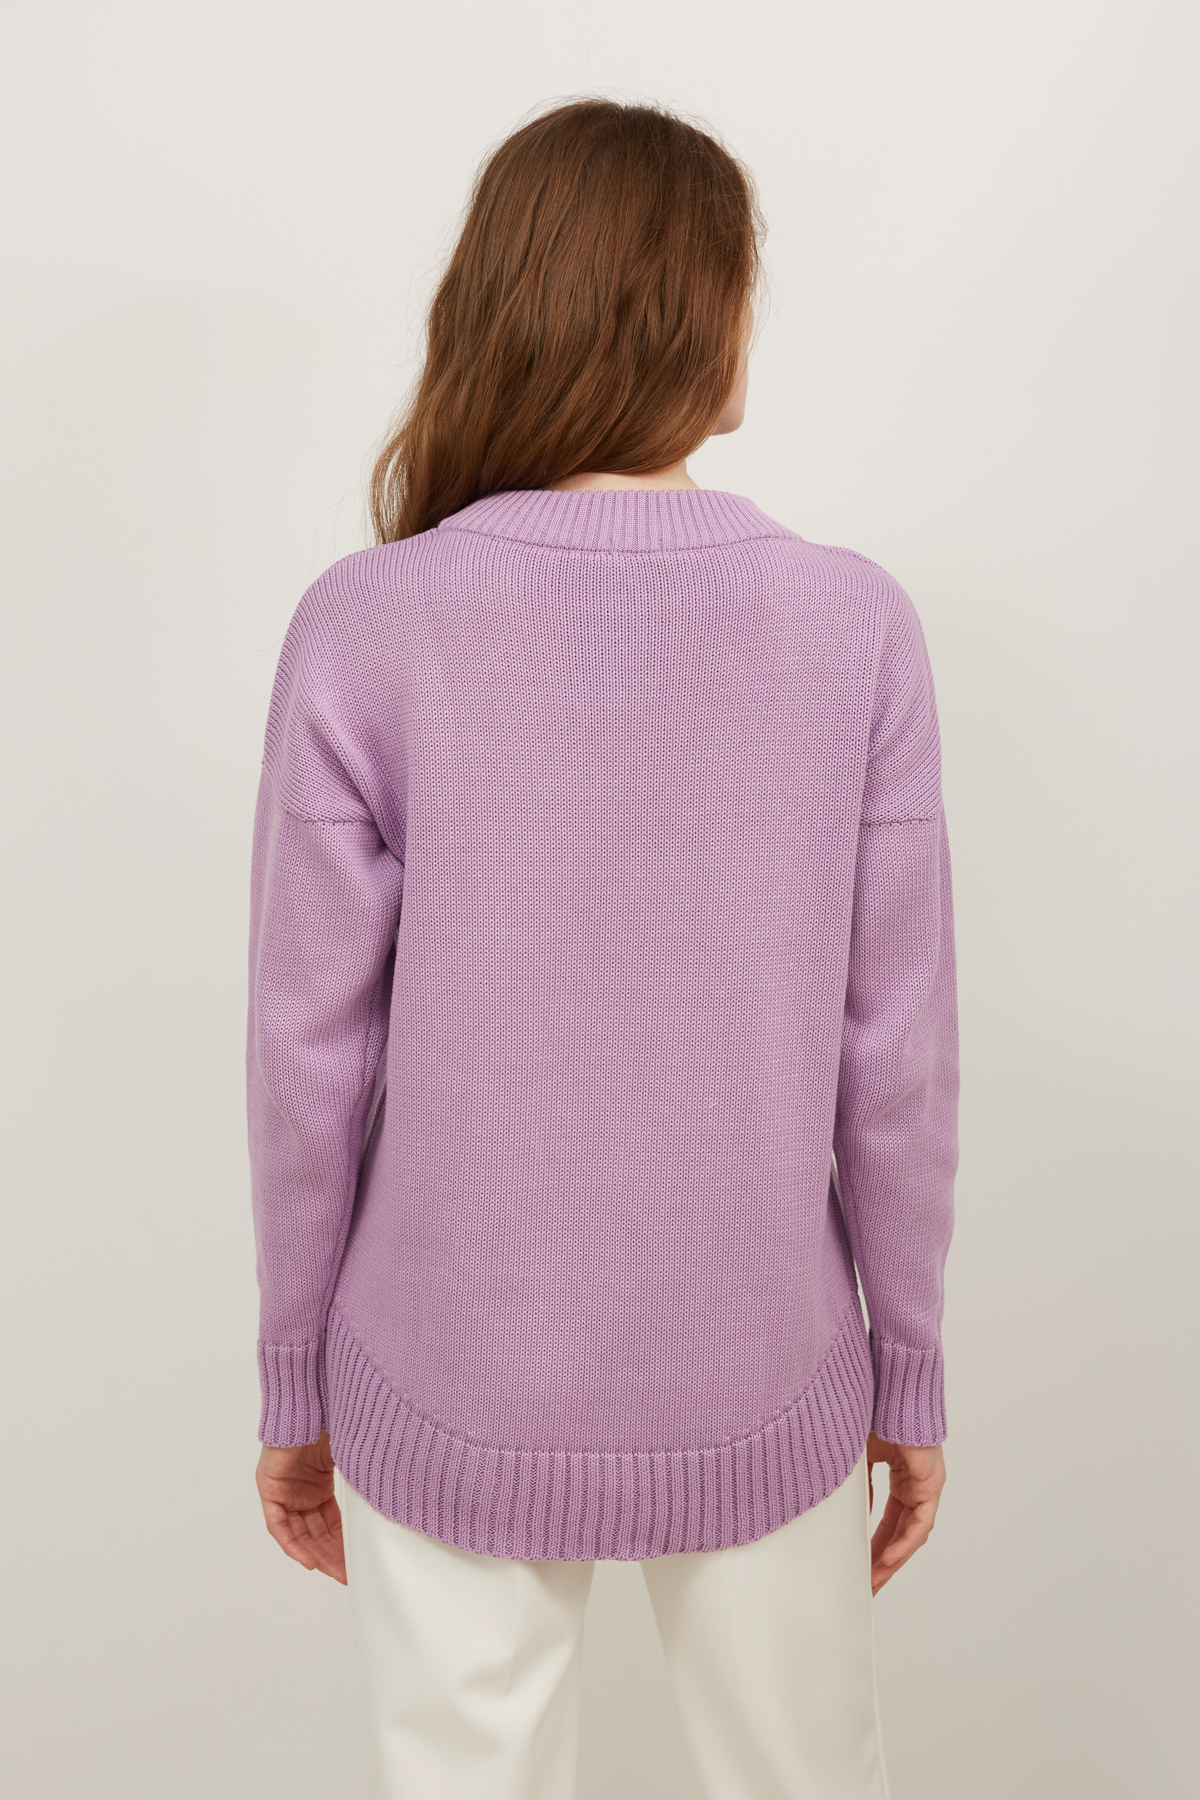 Lavender cotton sweater, photo 3